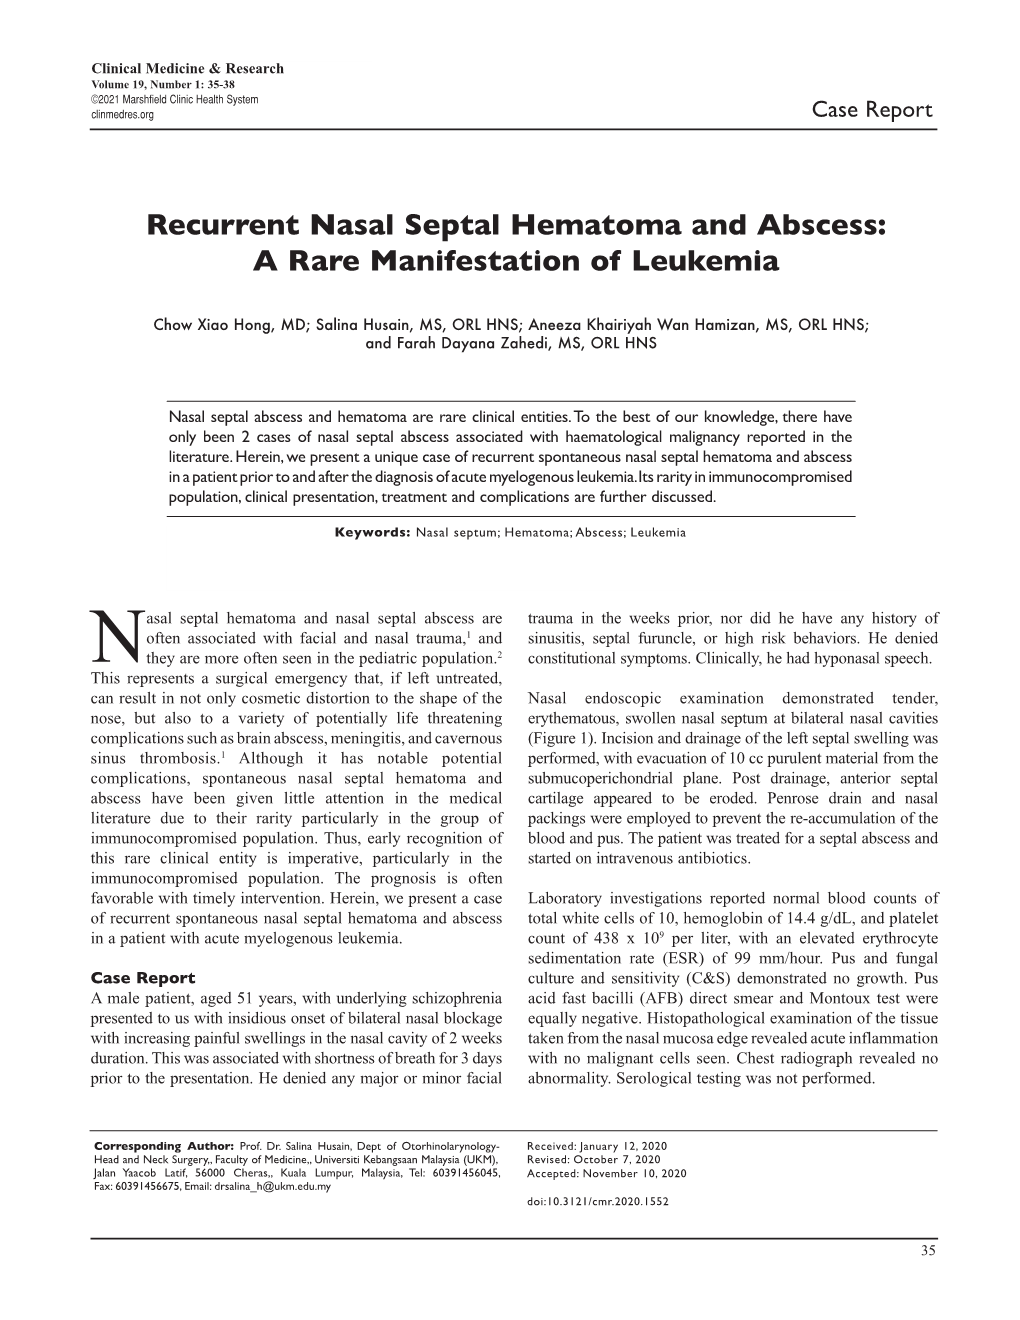 Recurrent Nasal Septal Hematoma and Abscess: a Rare Manifestation of Leukemia